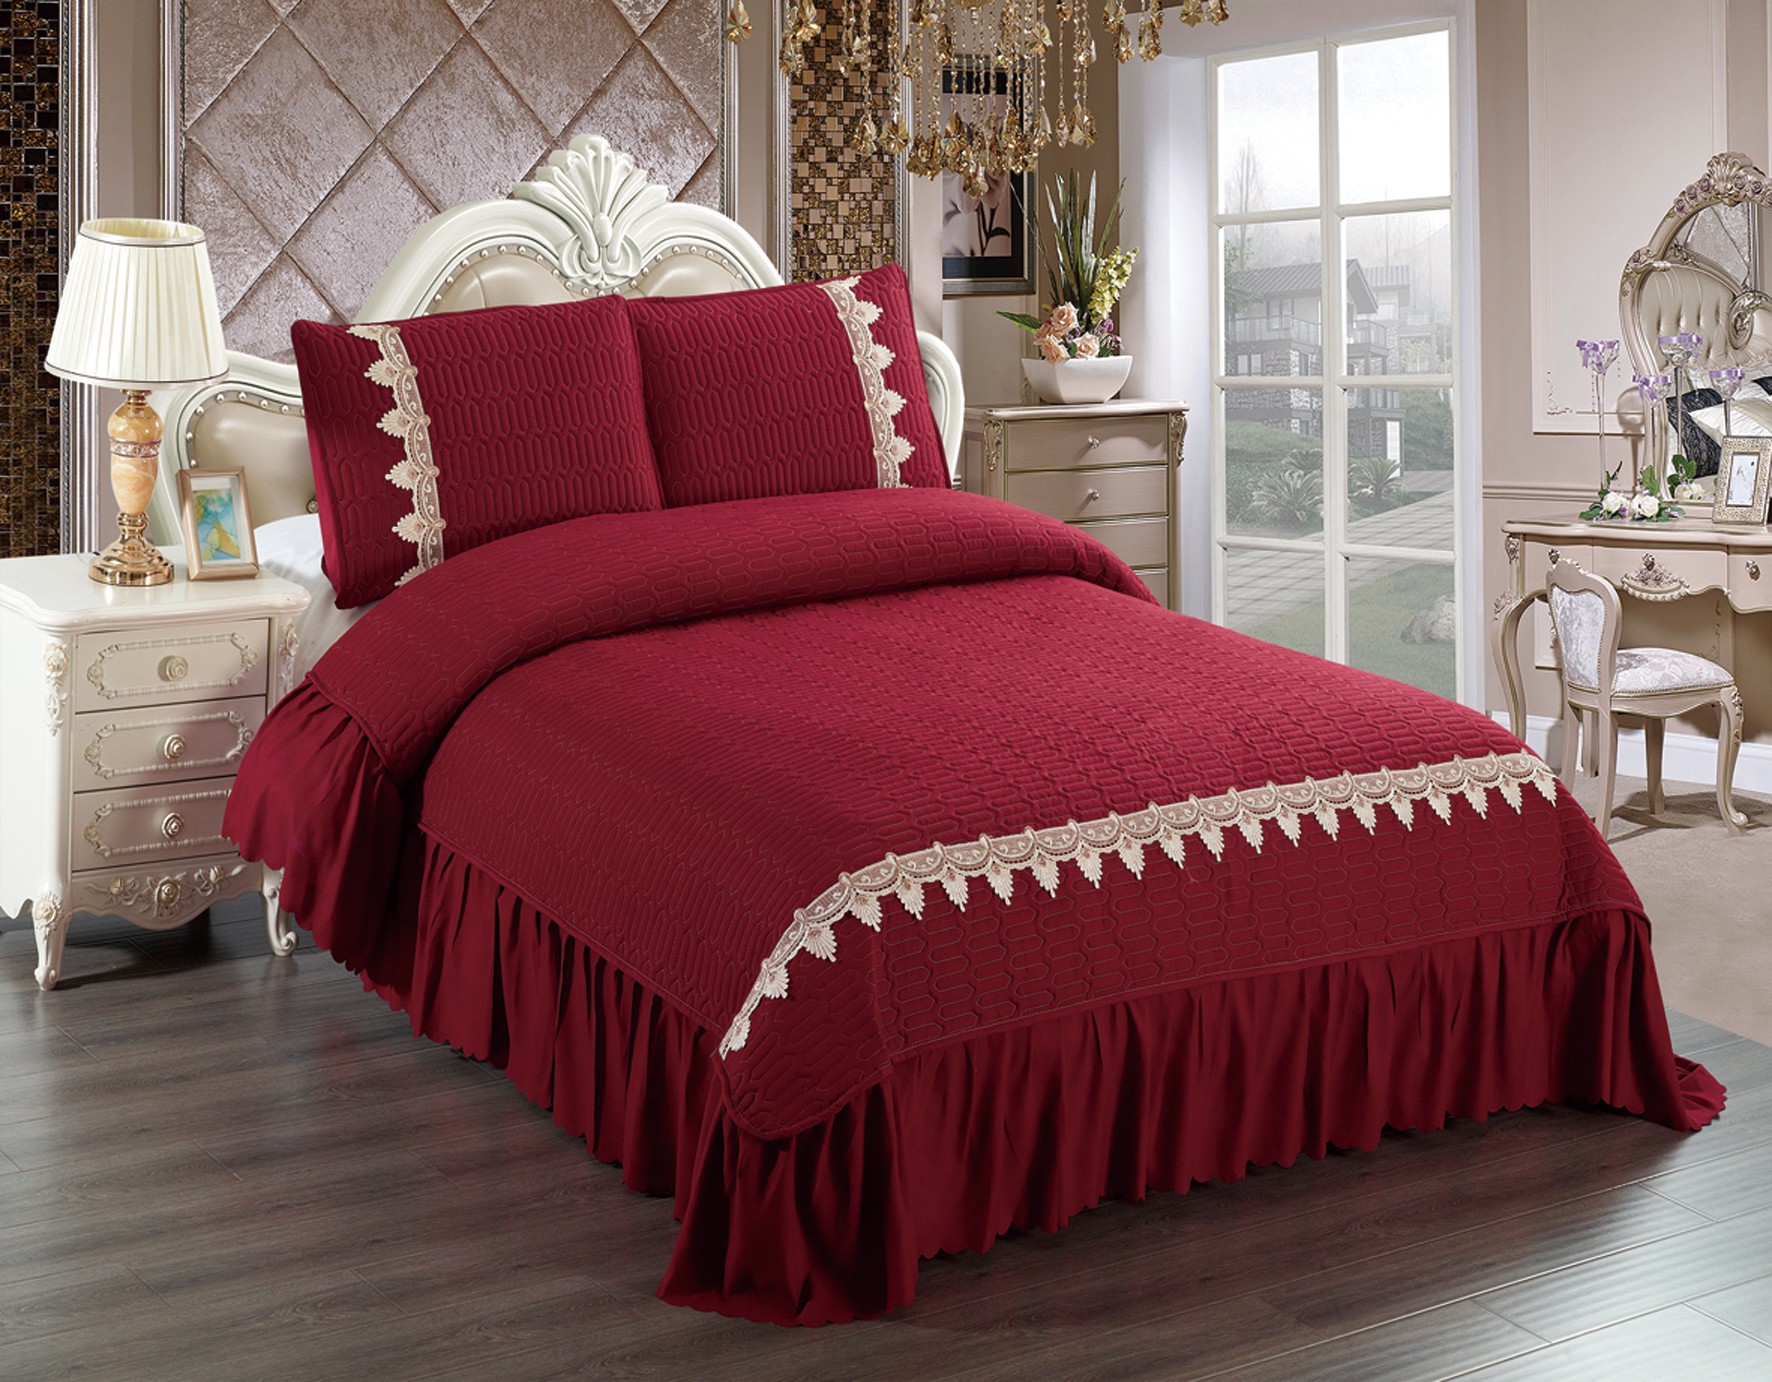 Bed Luxury Coverlet